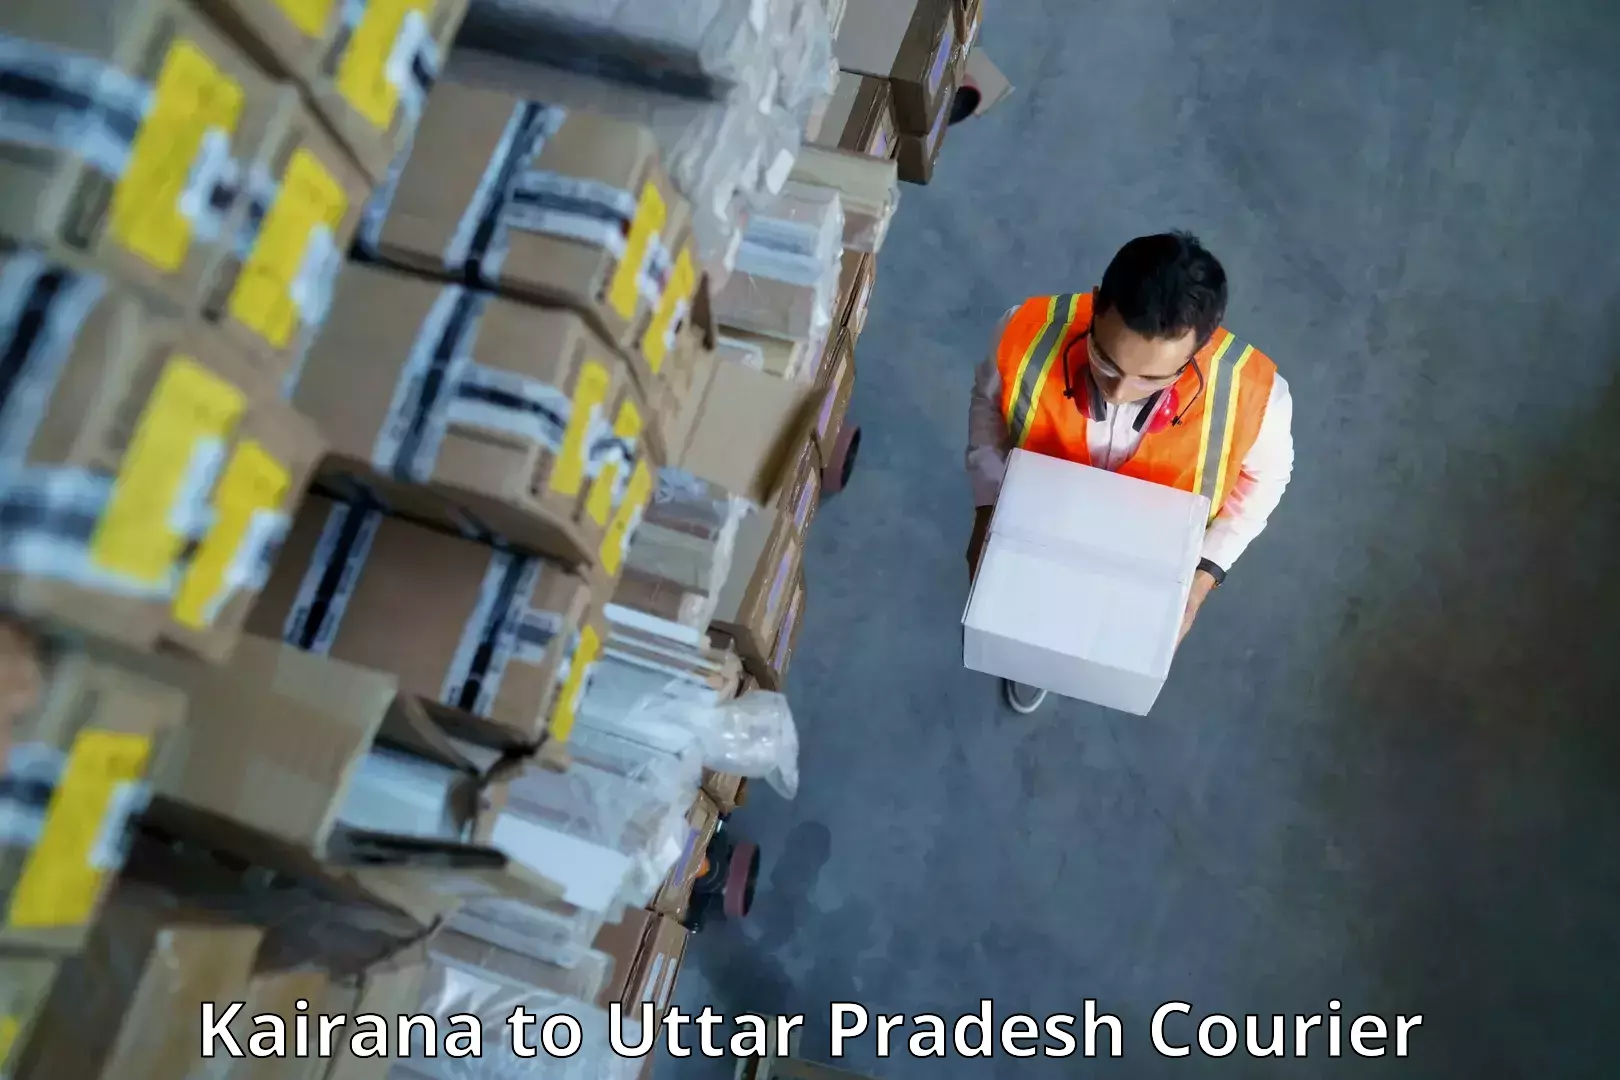 Specialized shipment handling Kairana to Noida